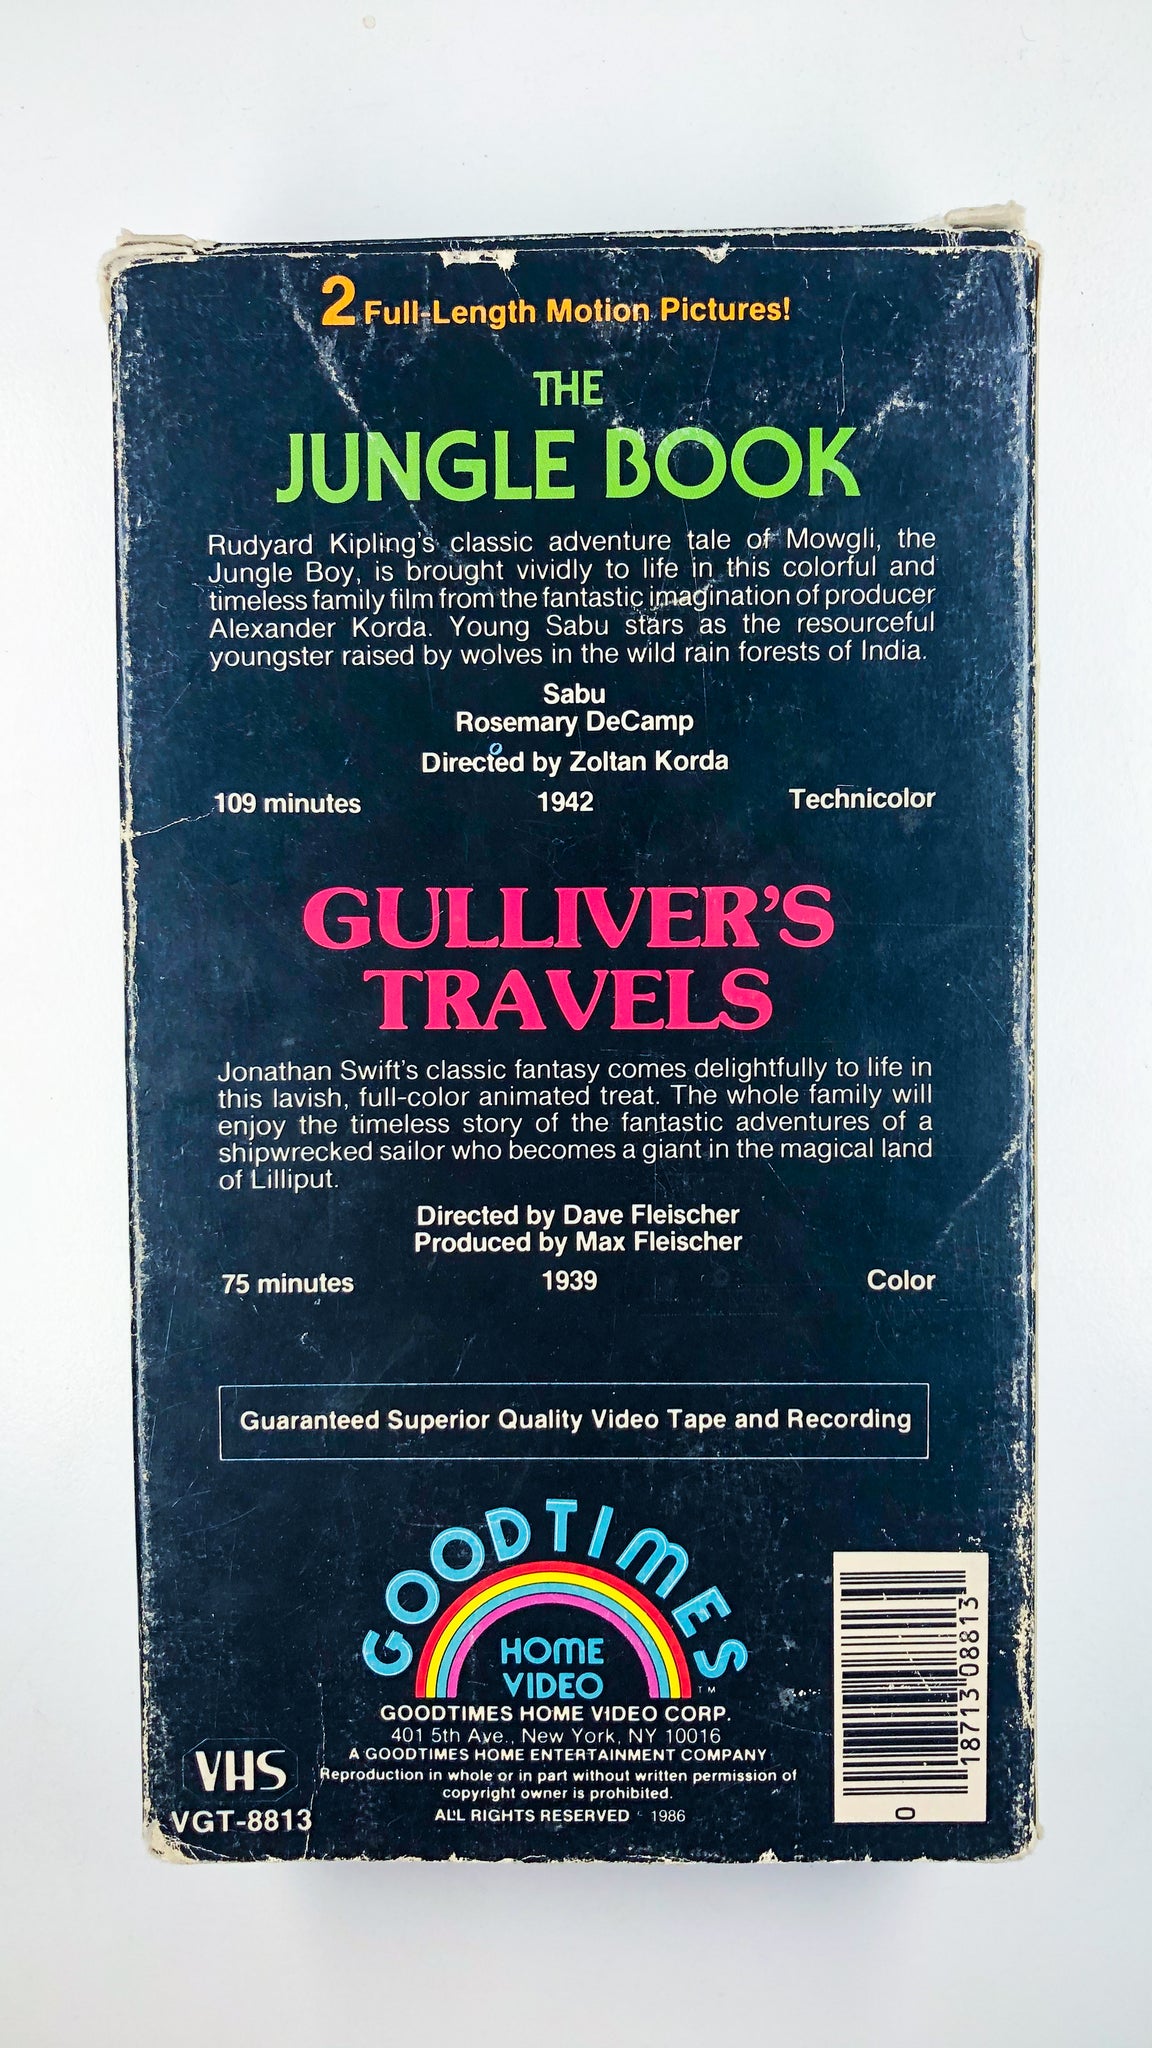 The Jungle Book/Gulliver's Travels